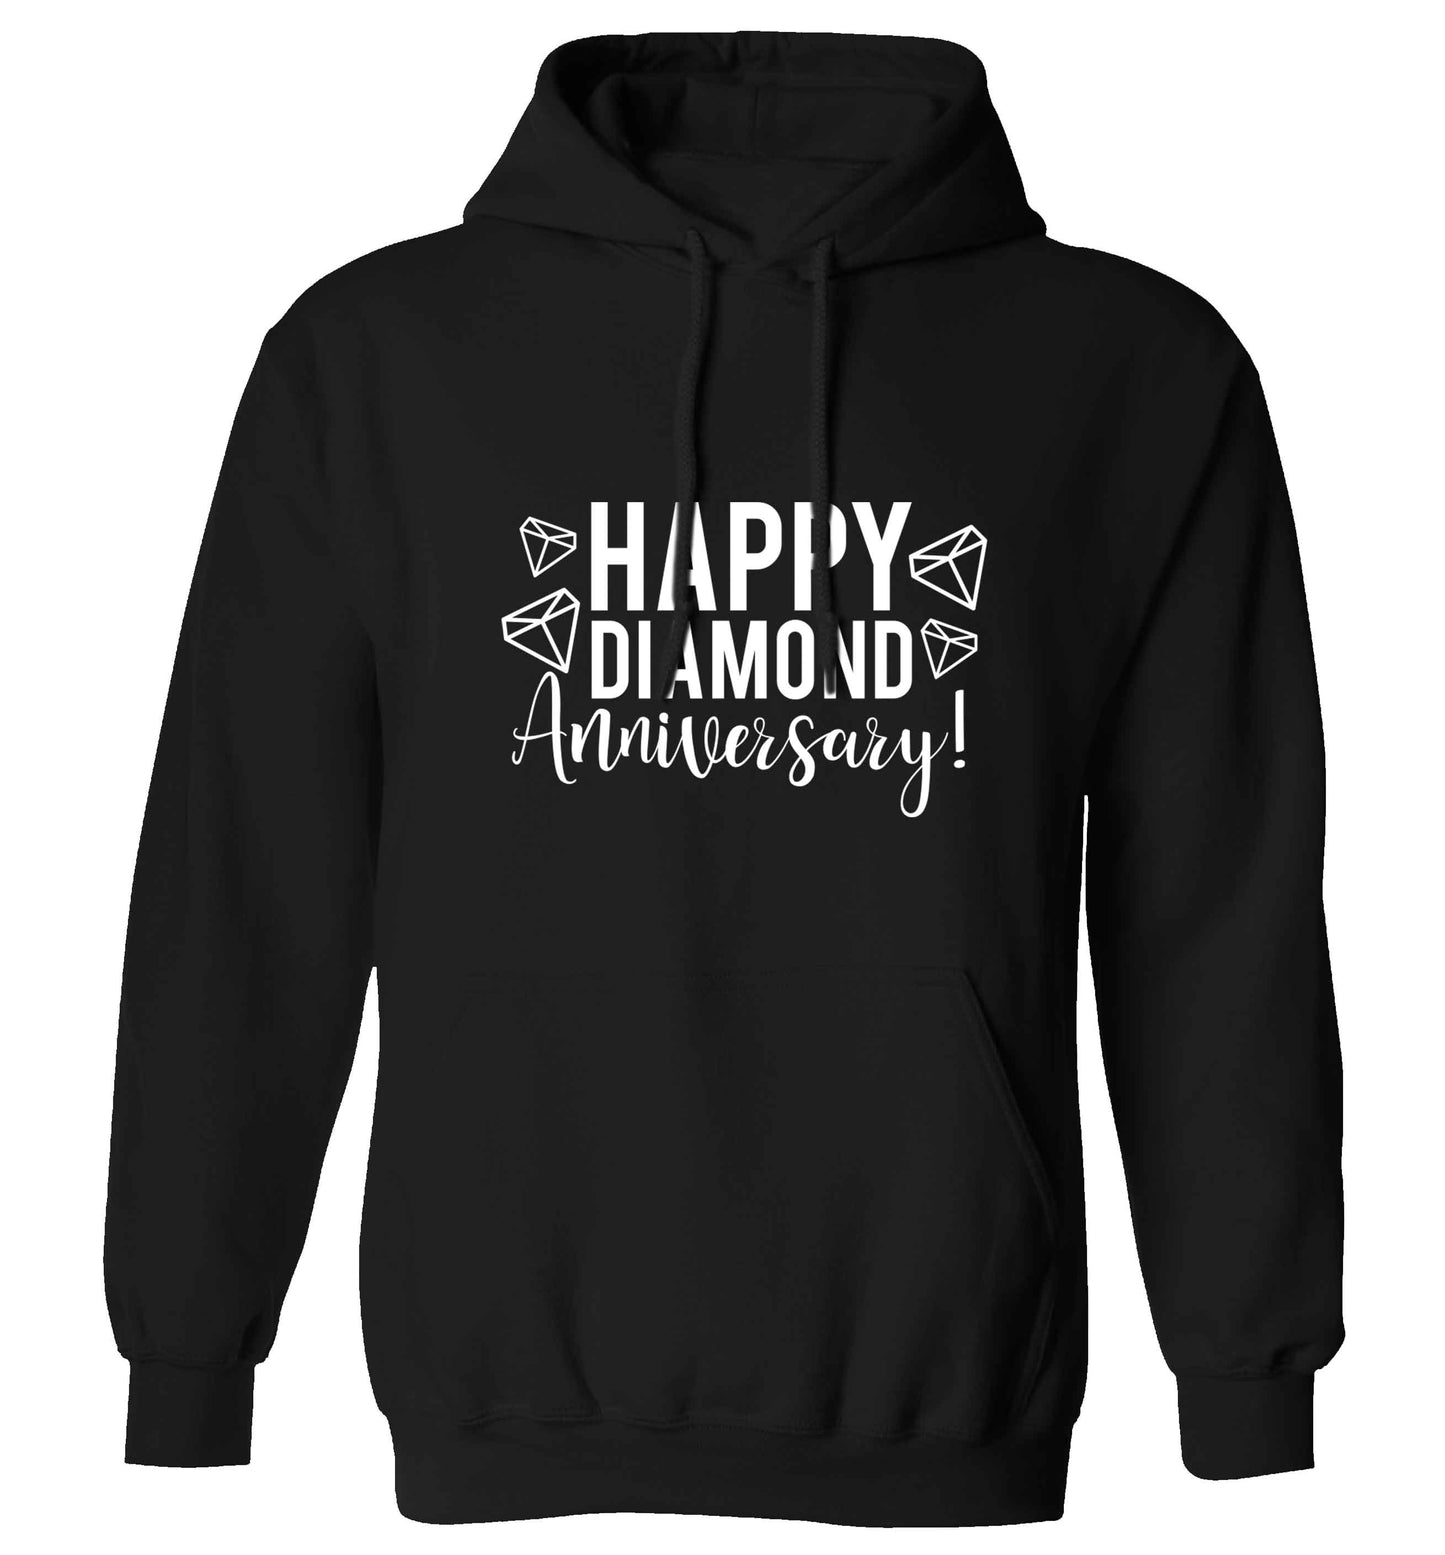 Happy diamond anniversary! adults unisex black hoodie 2XL